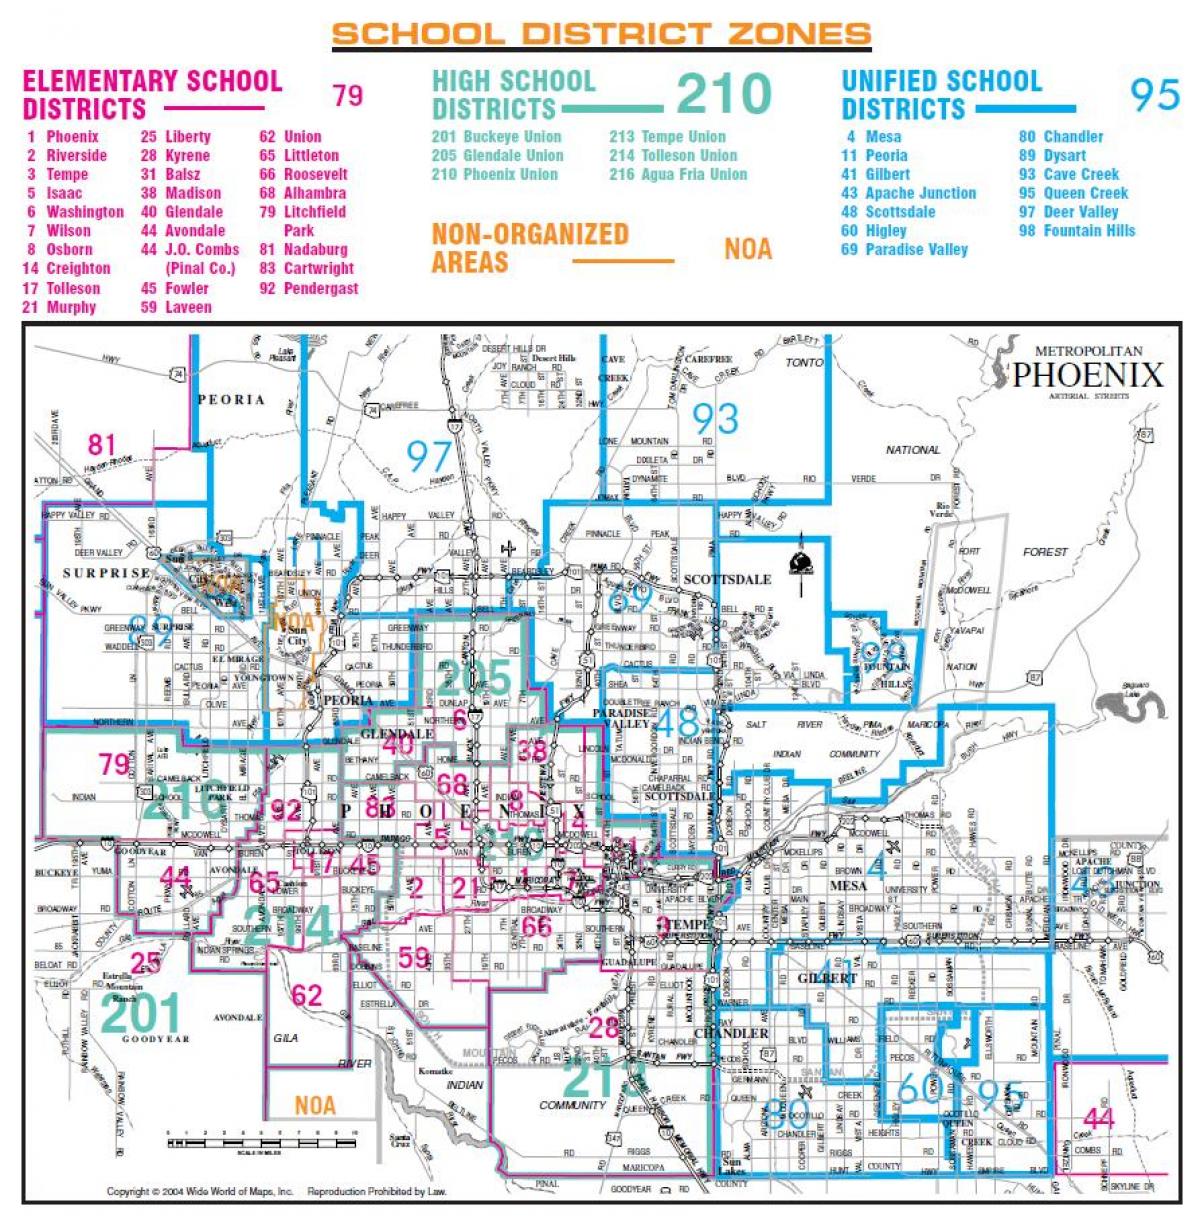 Phoenix union high school district hartă